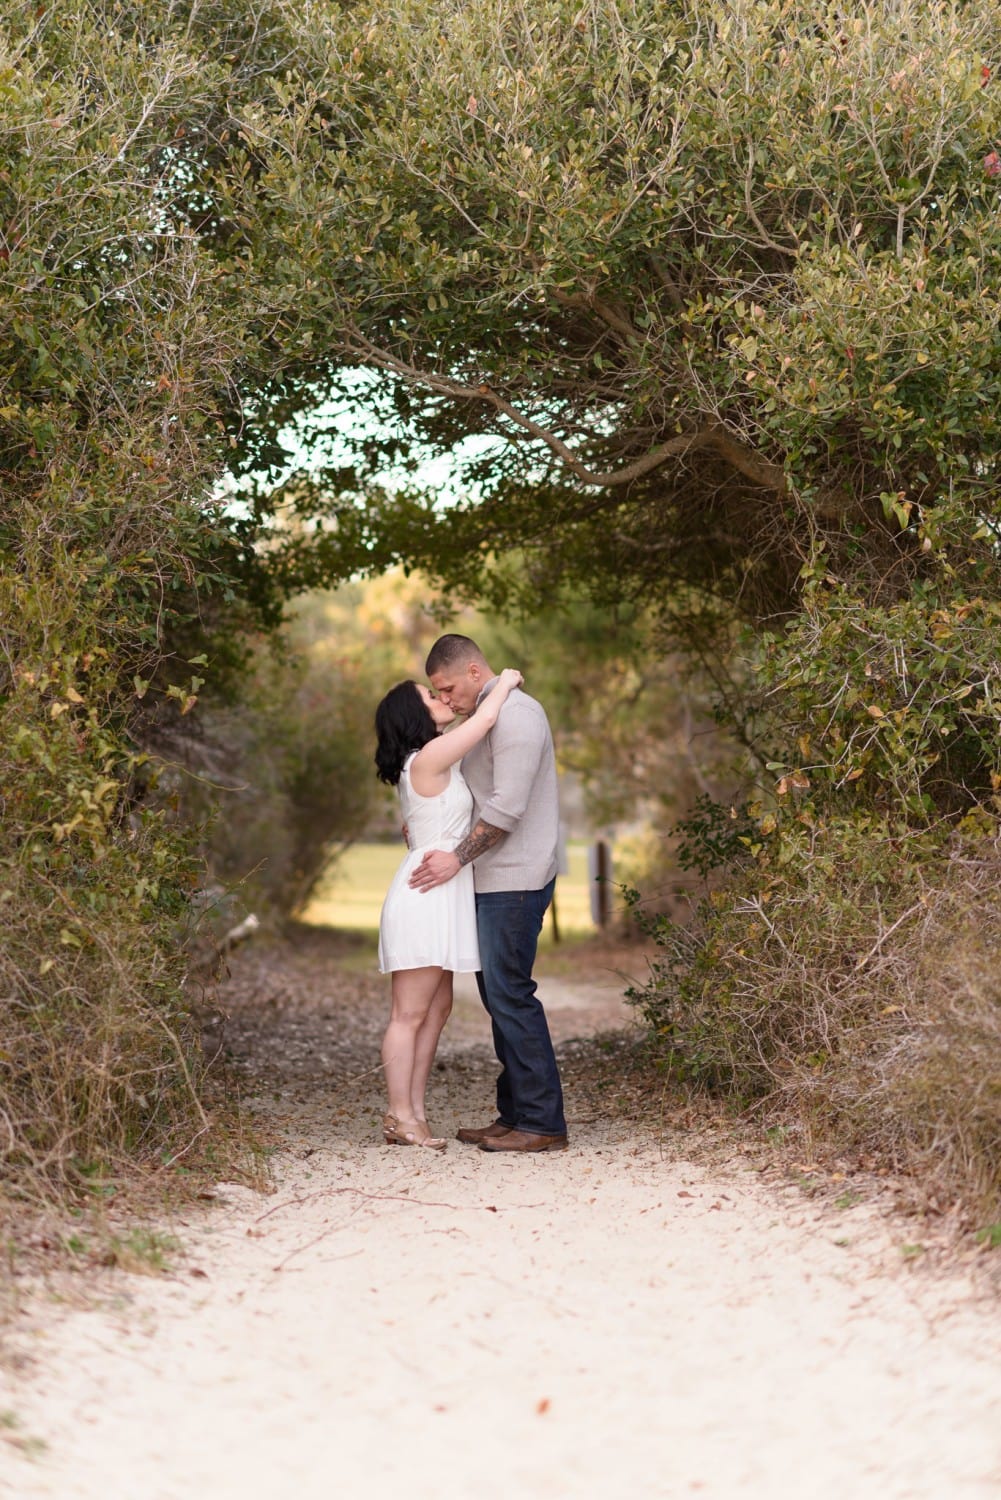 Kisses on the beach walkway - Huntington State Park